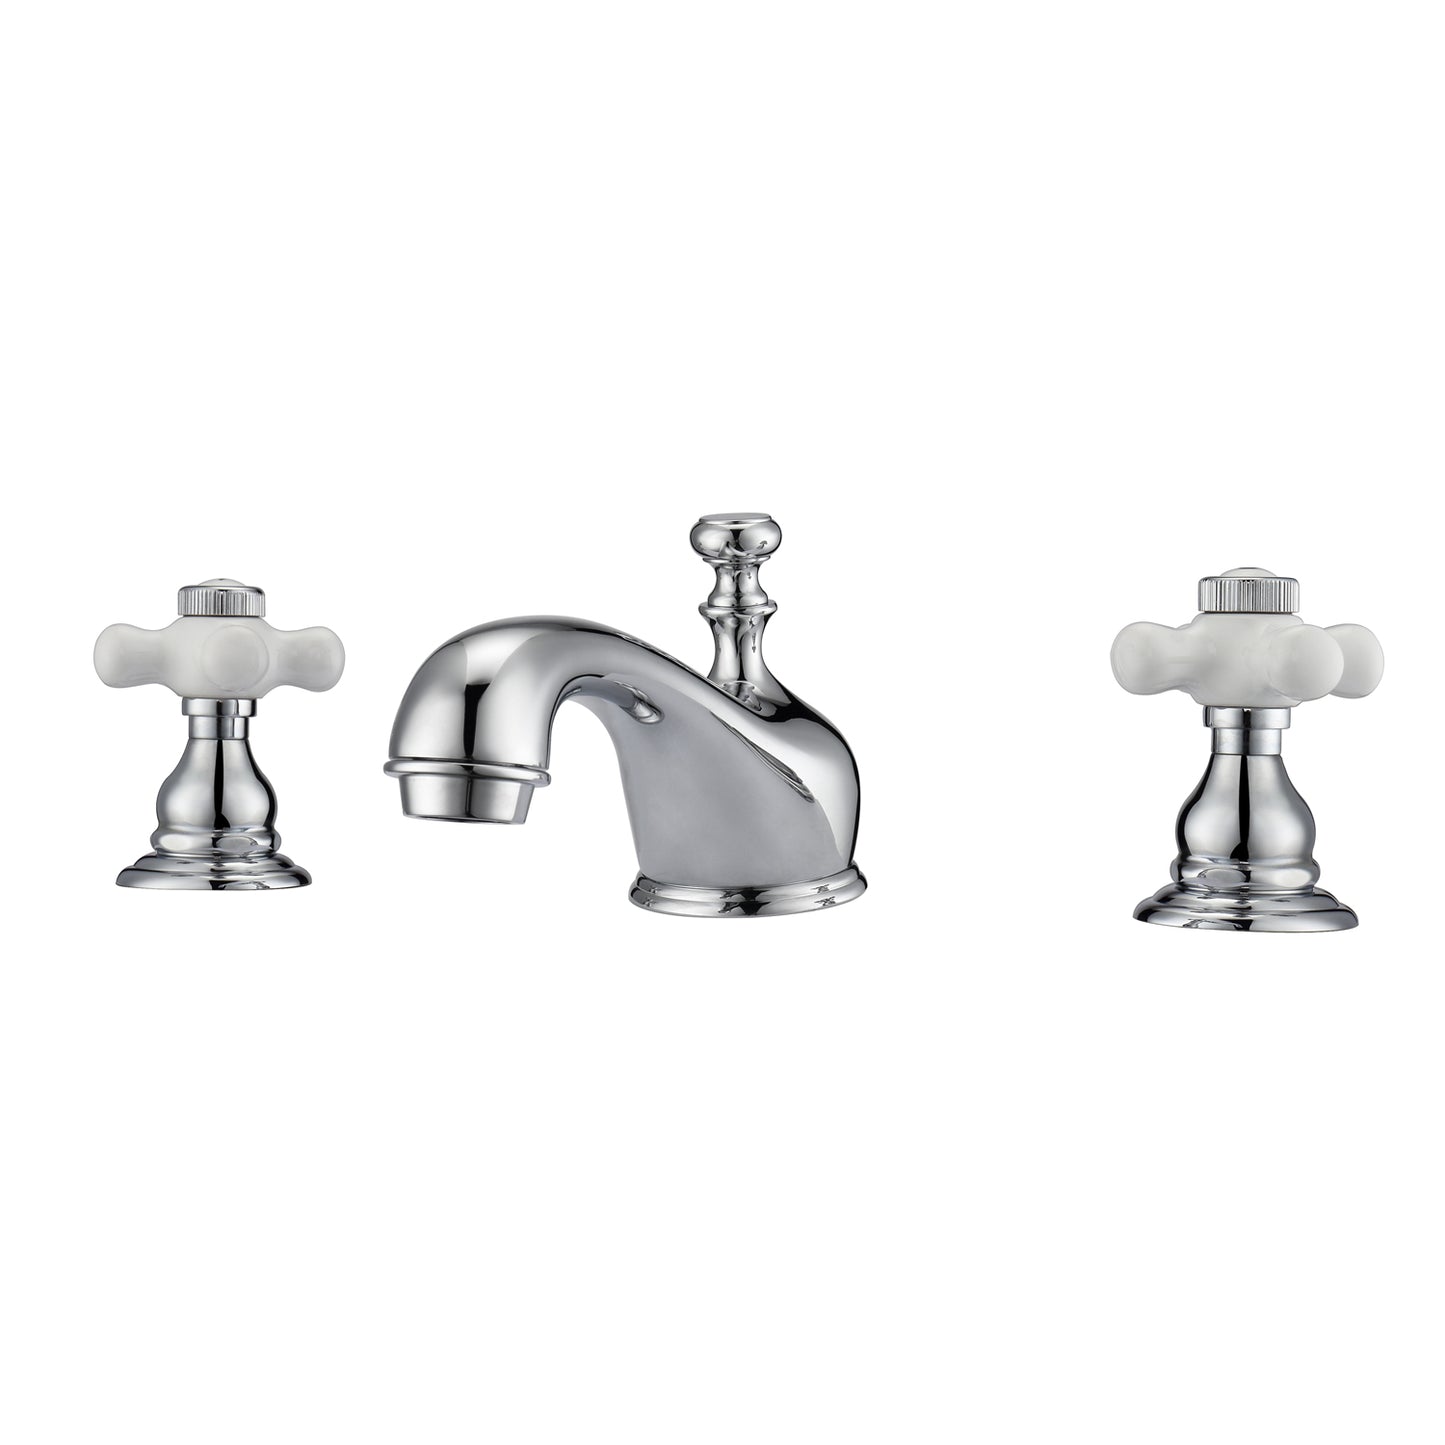 Marsala 8" Widespread Chrome Bathroom Faucet with Porcelain Cross Handles